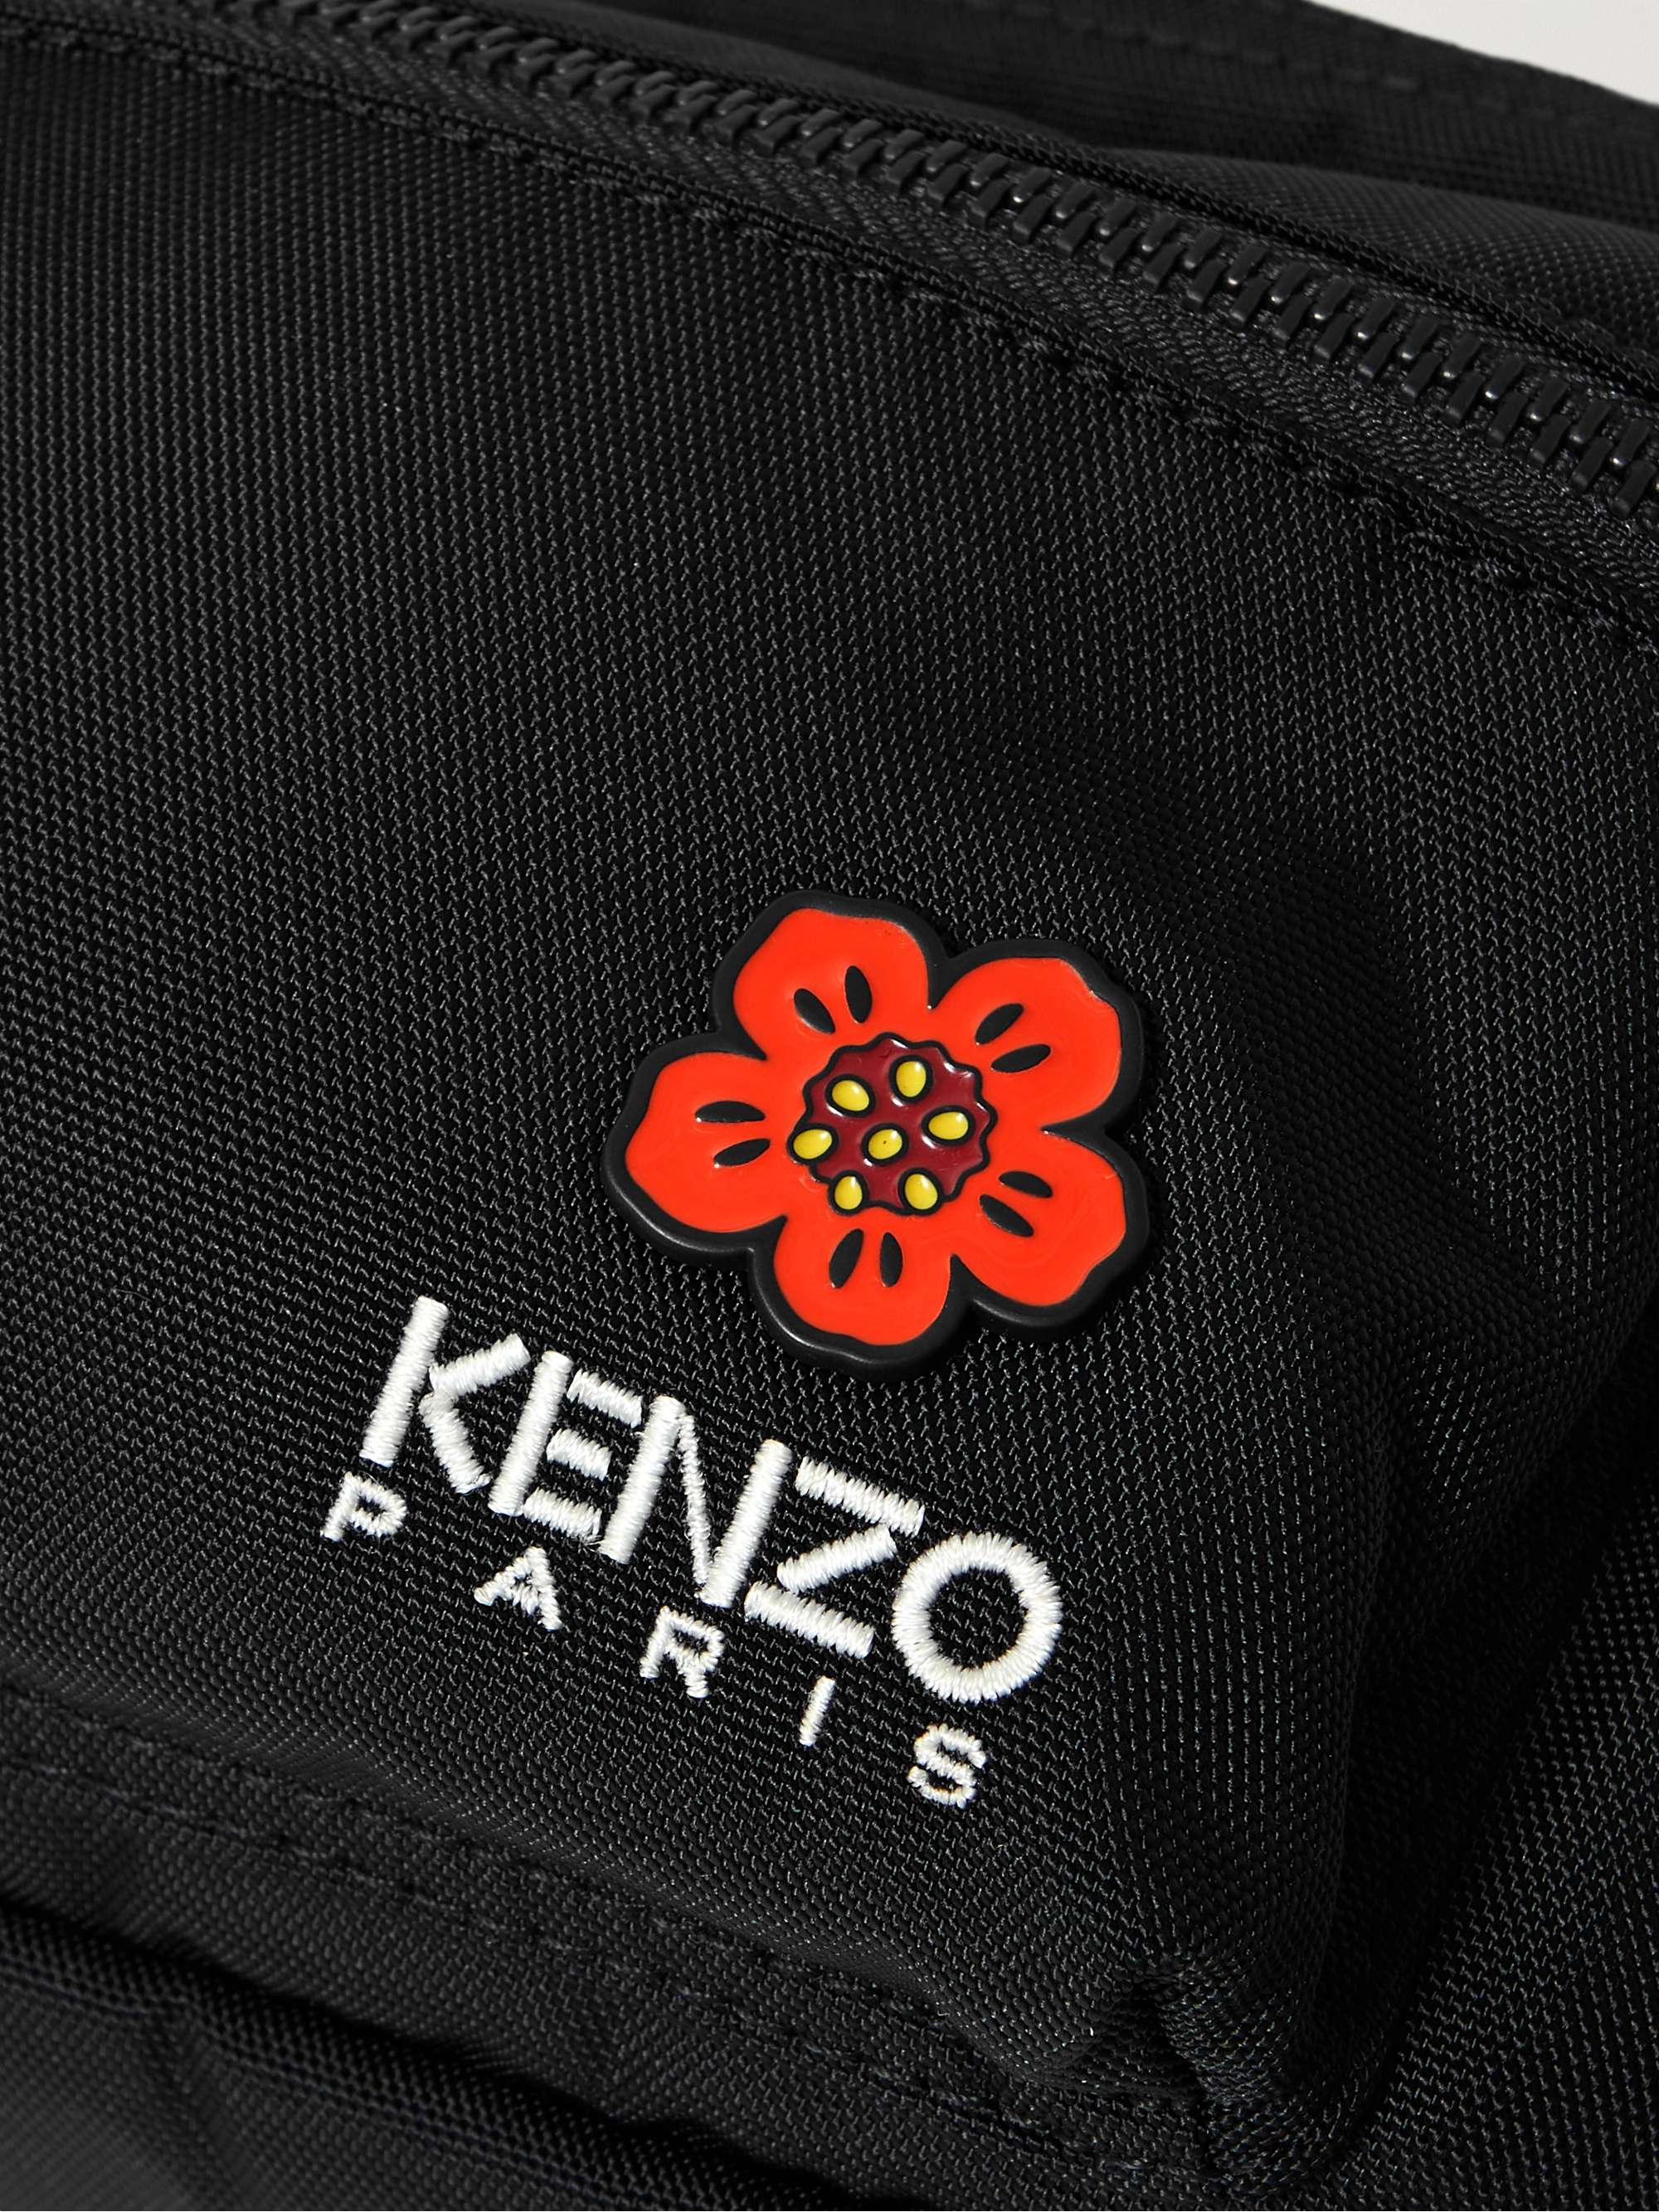 KENZO ロゴ入り crossbody bag / ベルトバッグ